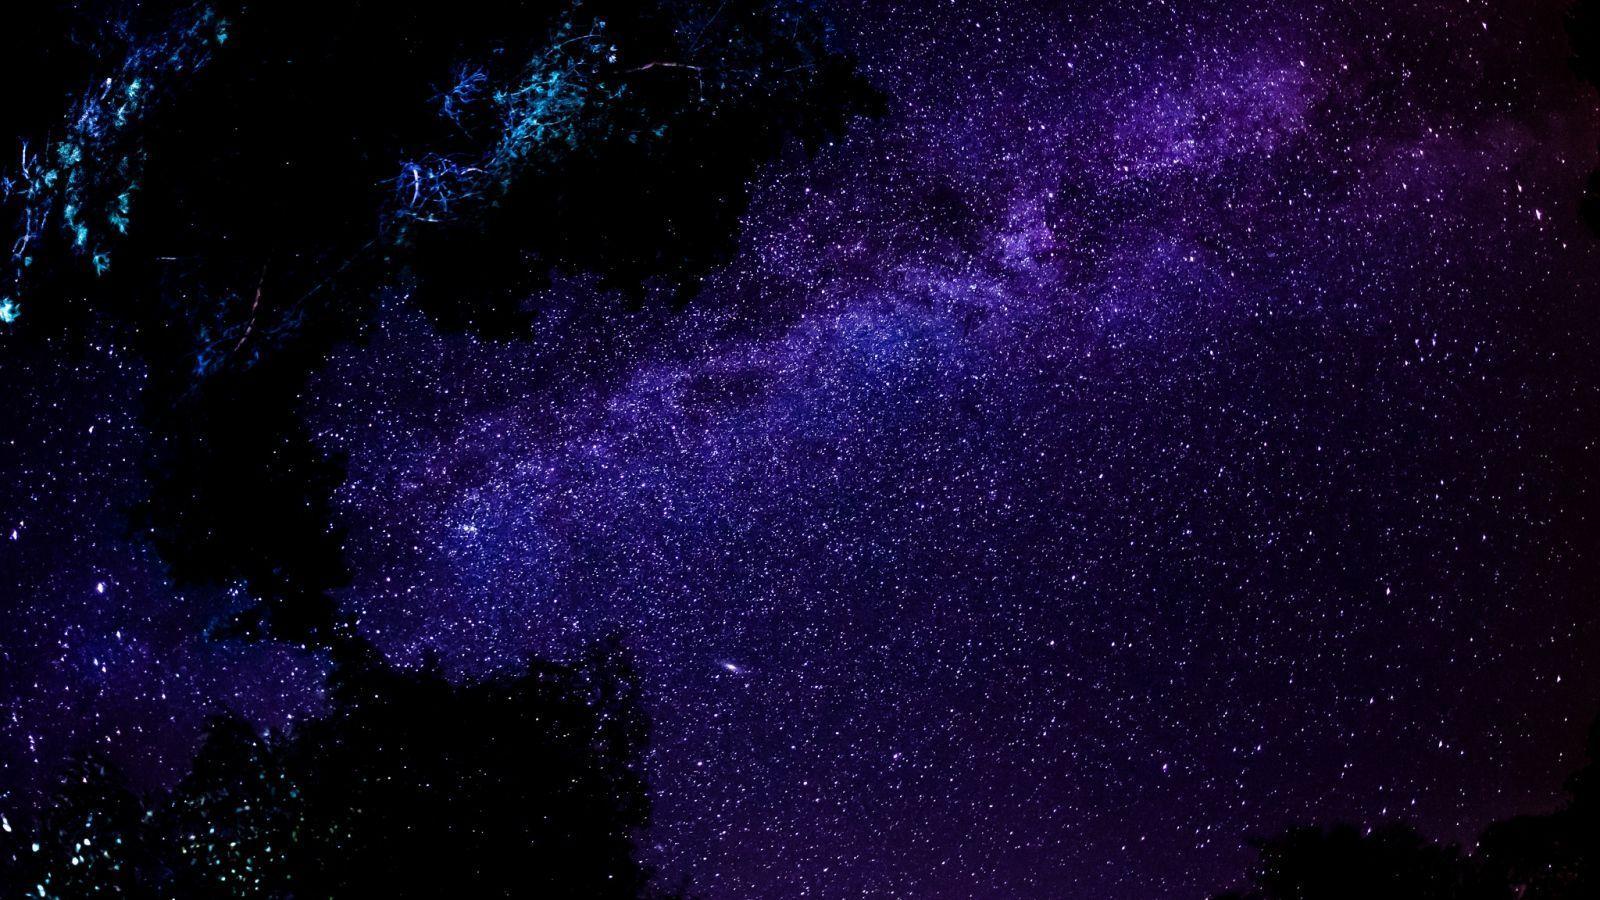 Star Night Background